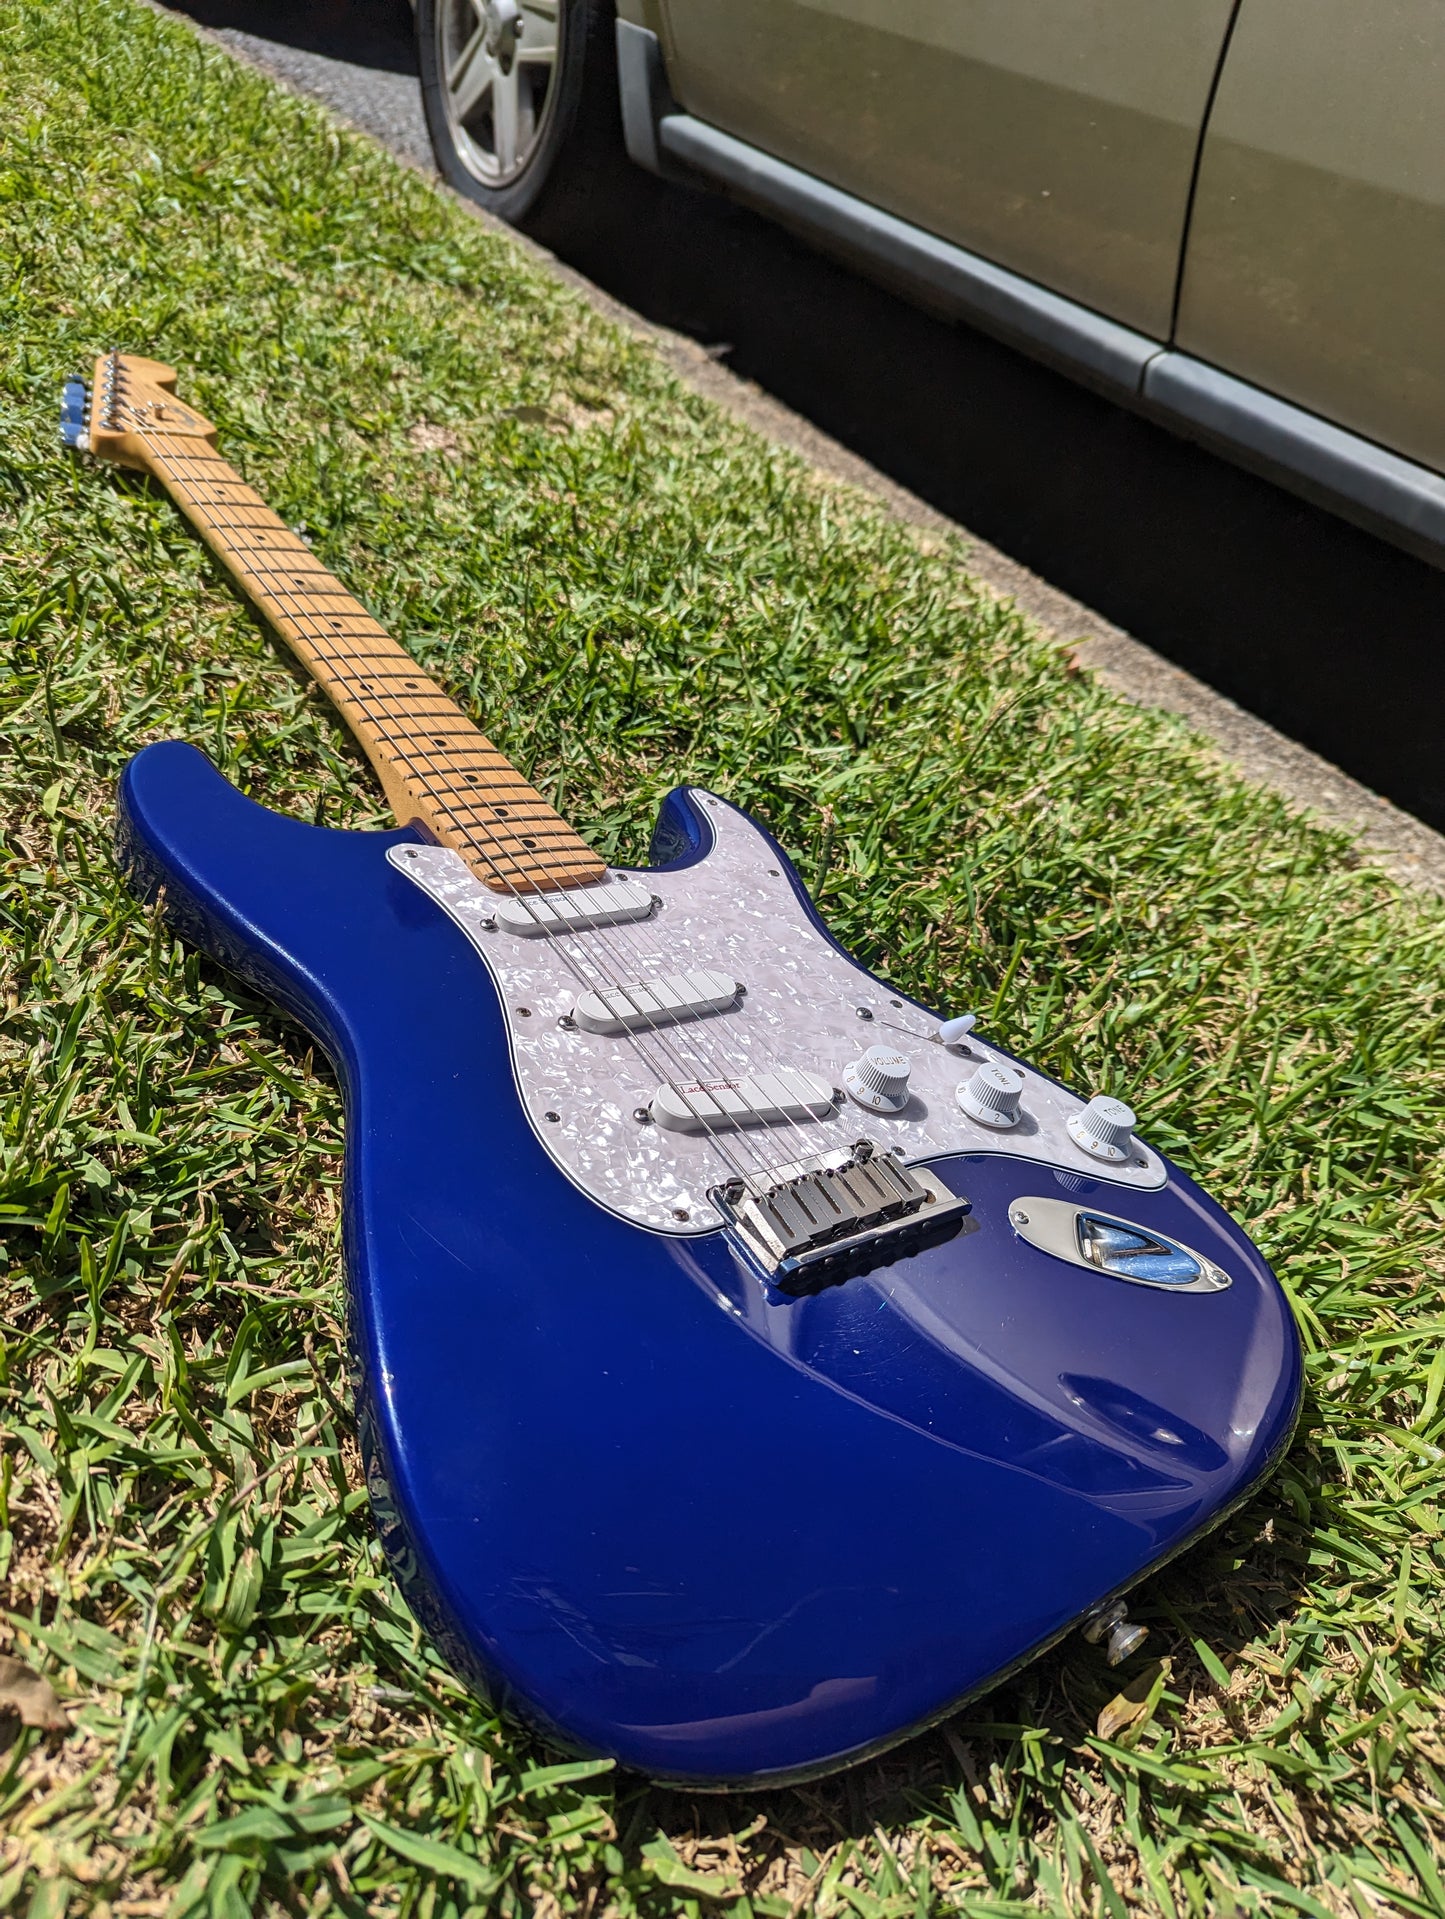 1991 Fender Stratocaster American Standard